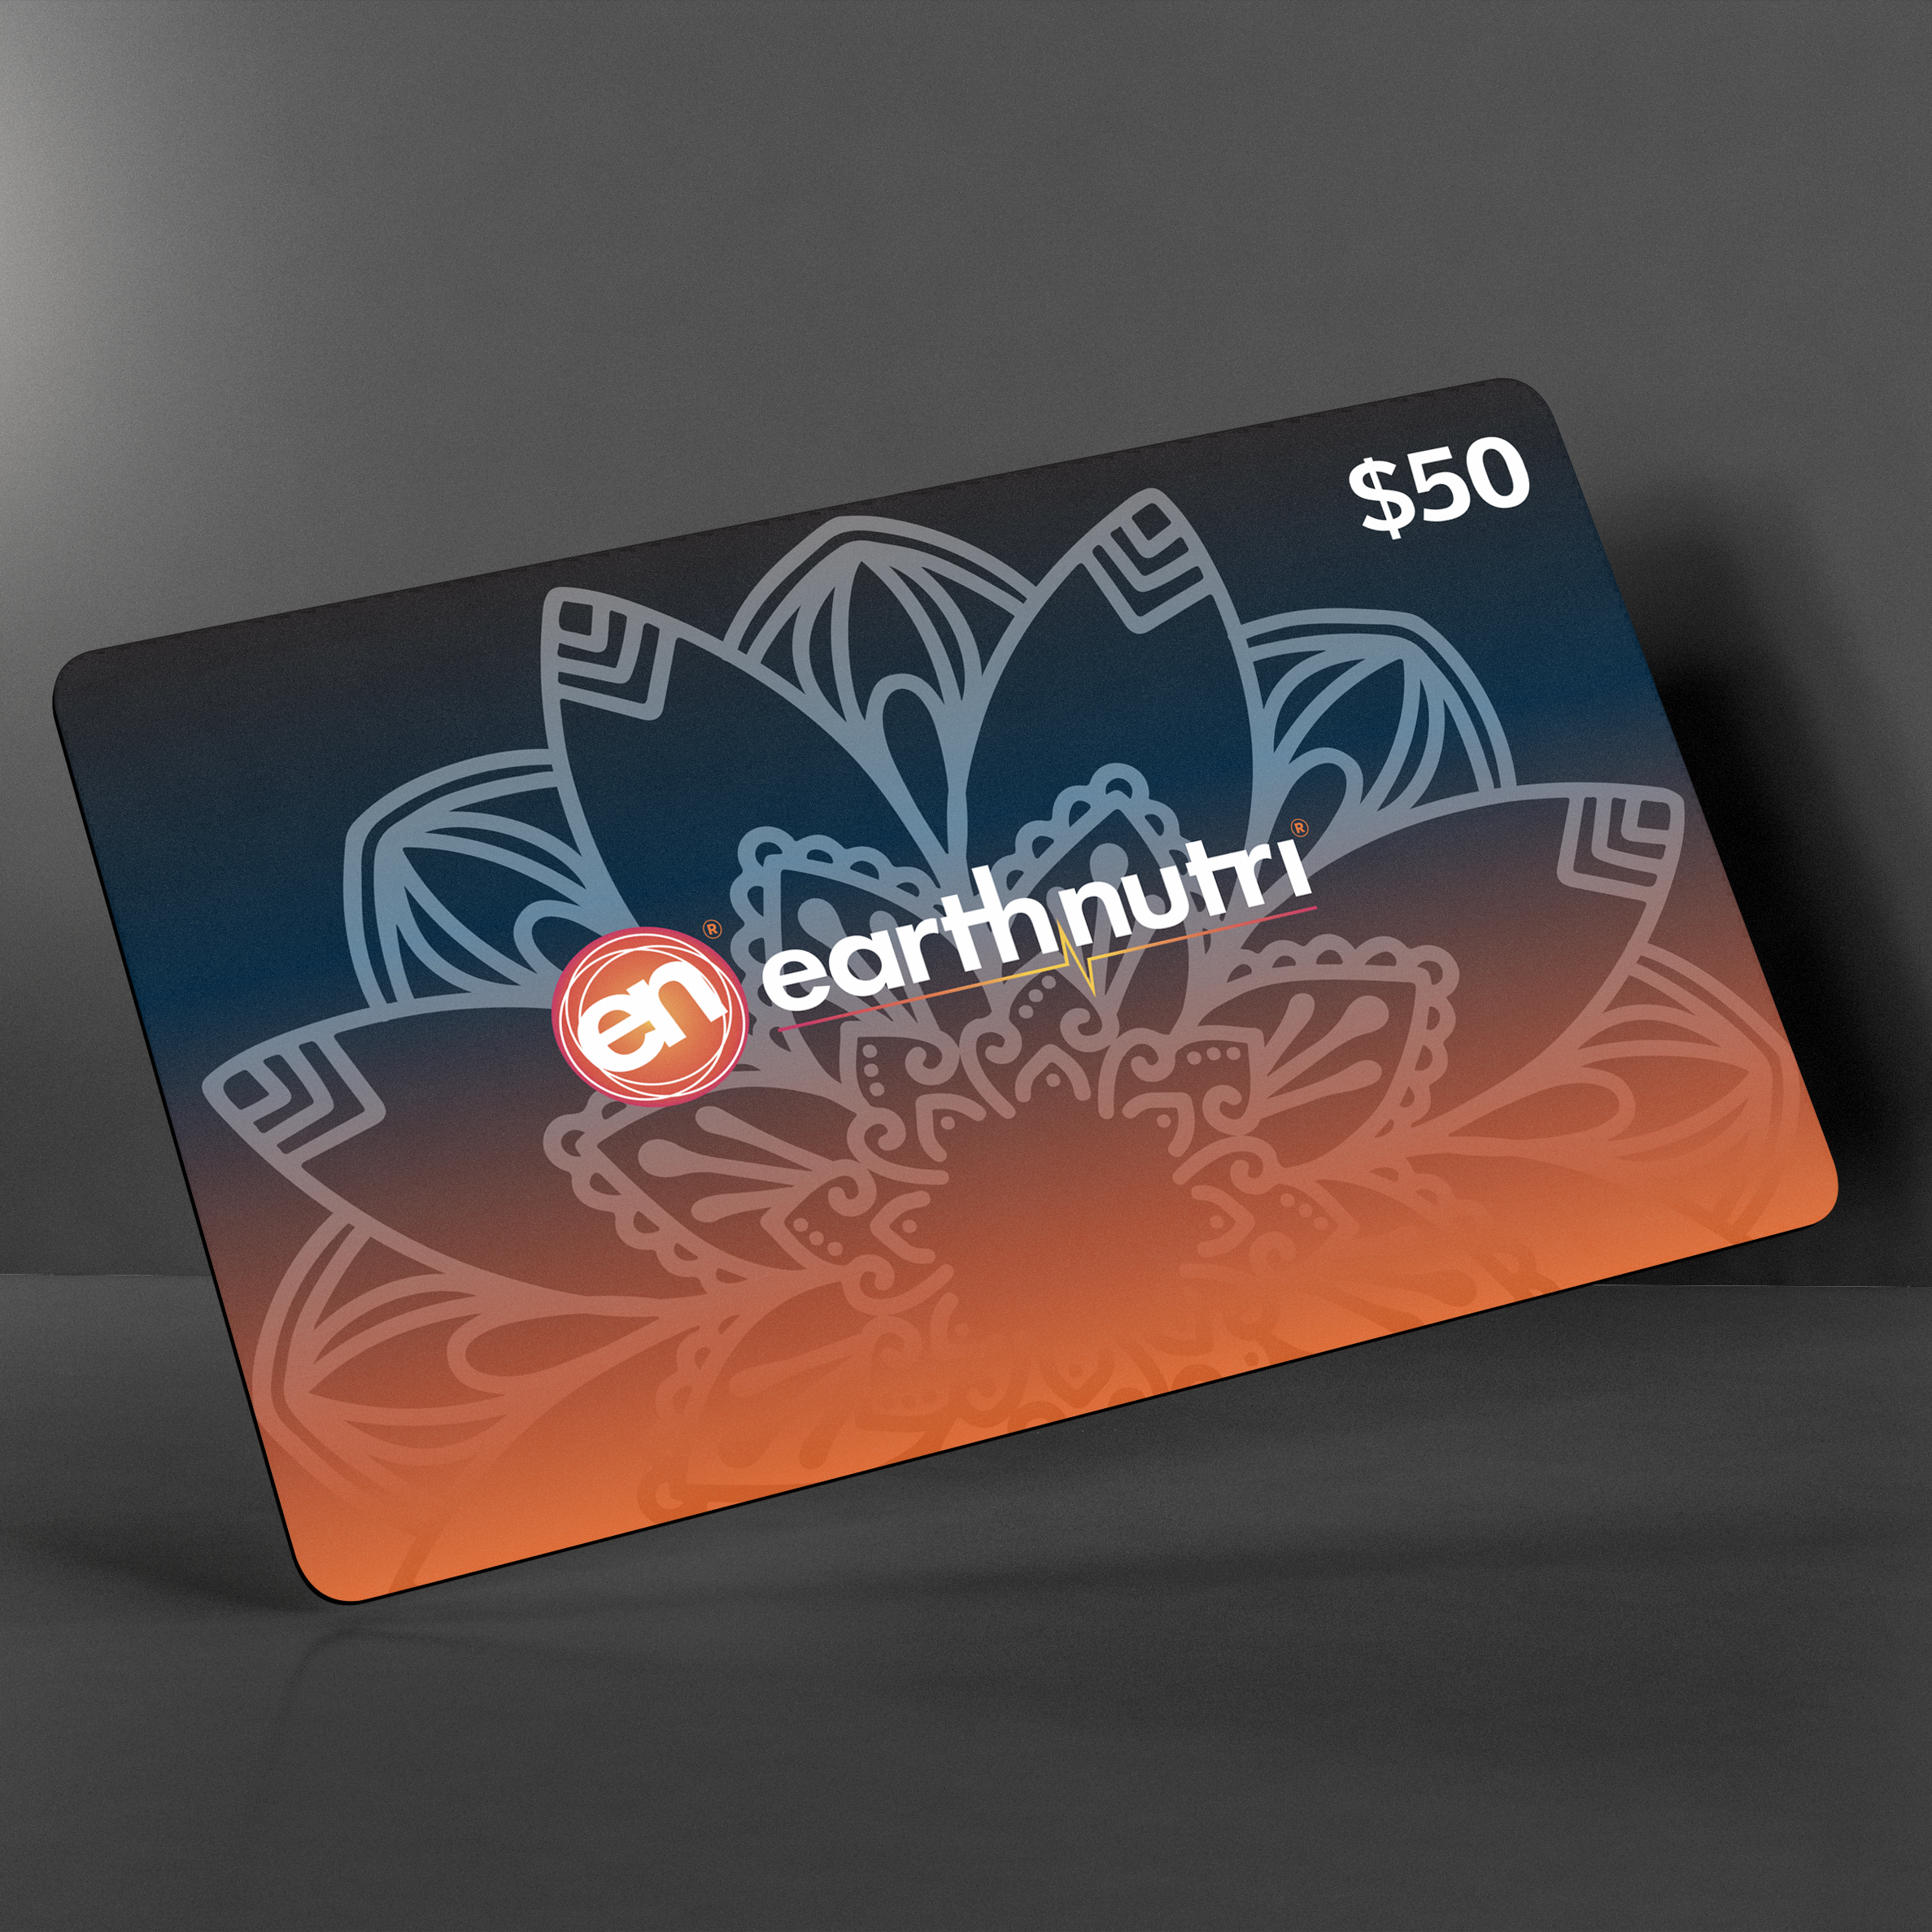 EarthNutri E-Gift Card